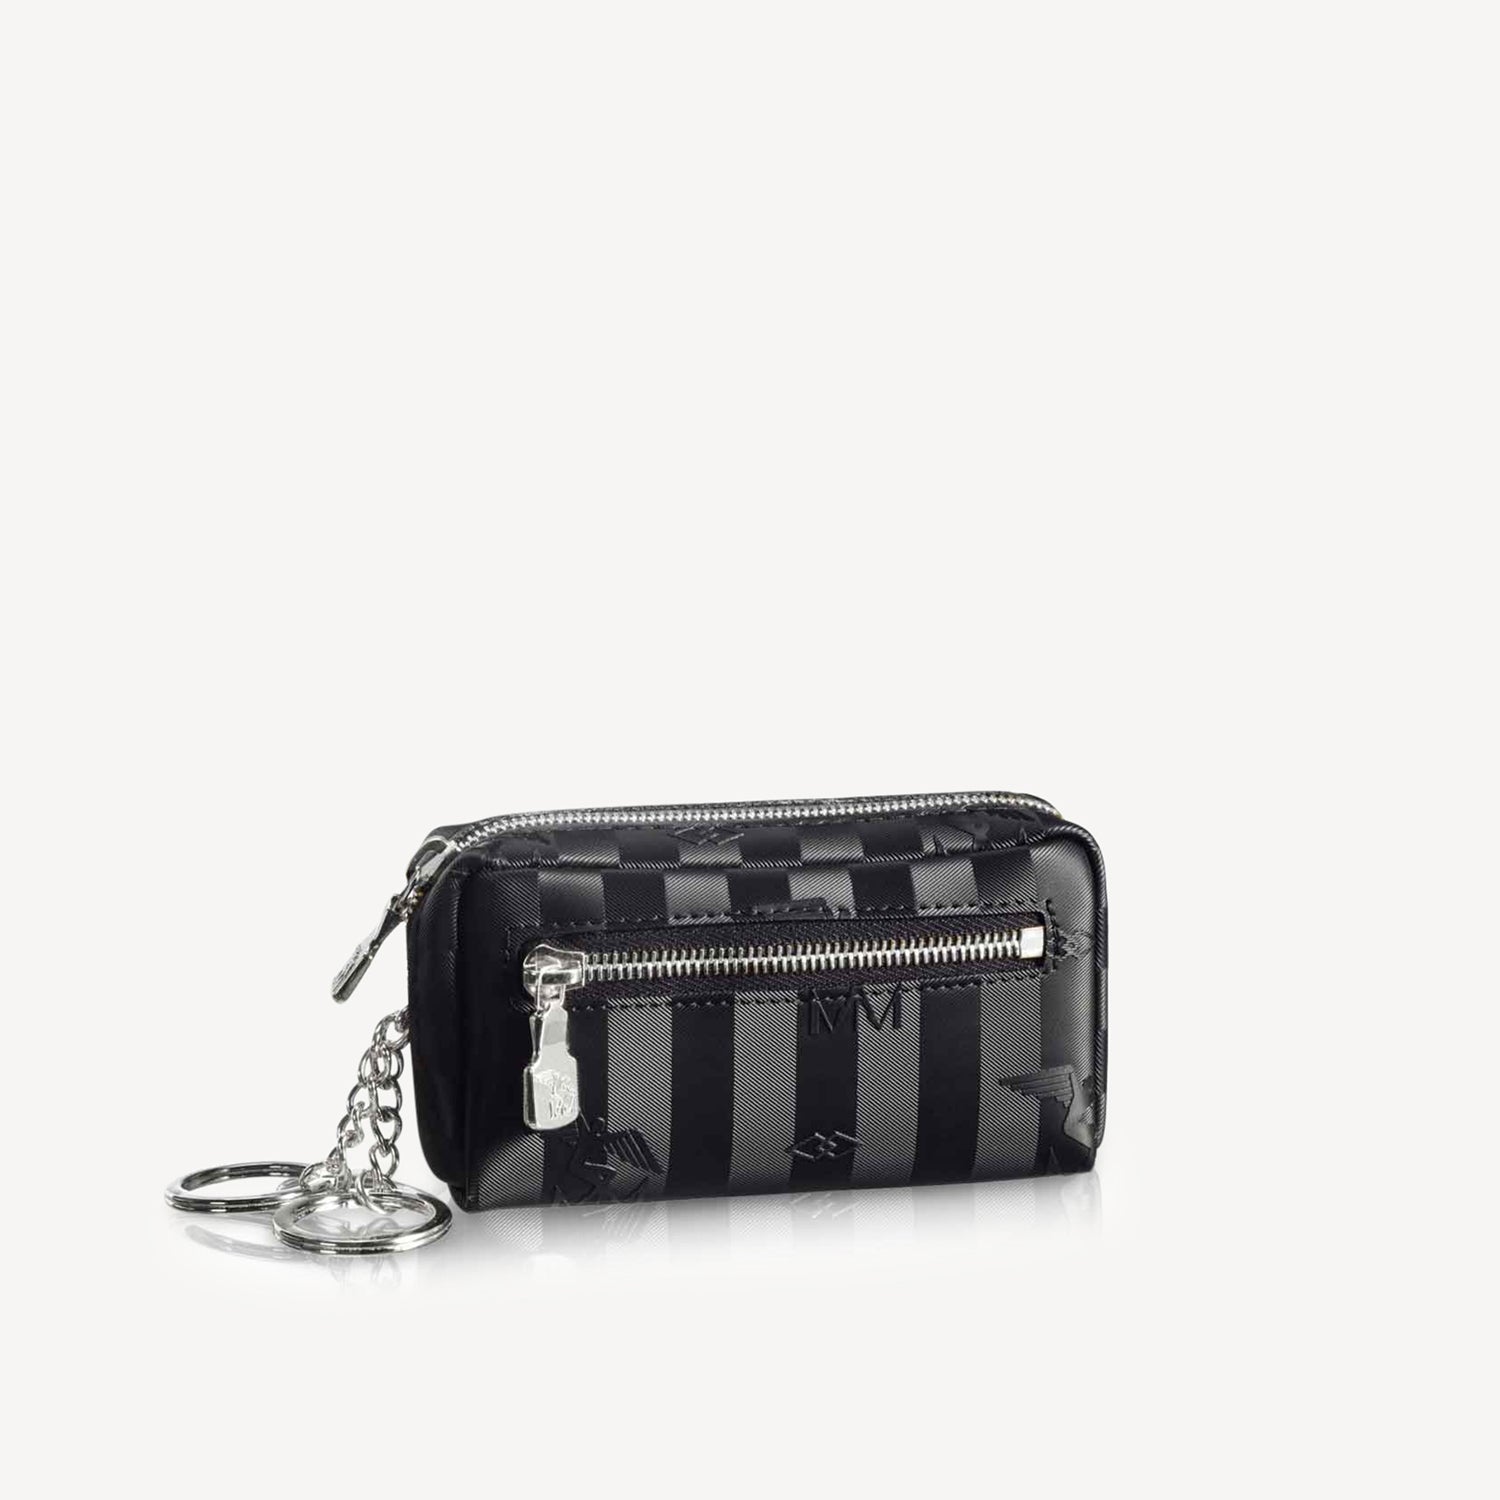 DOM | key case black / silver